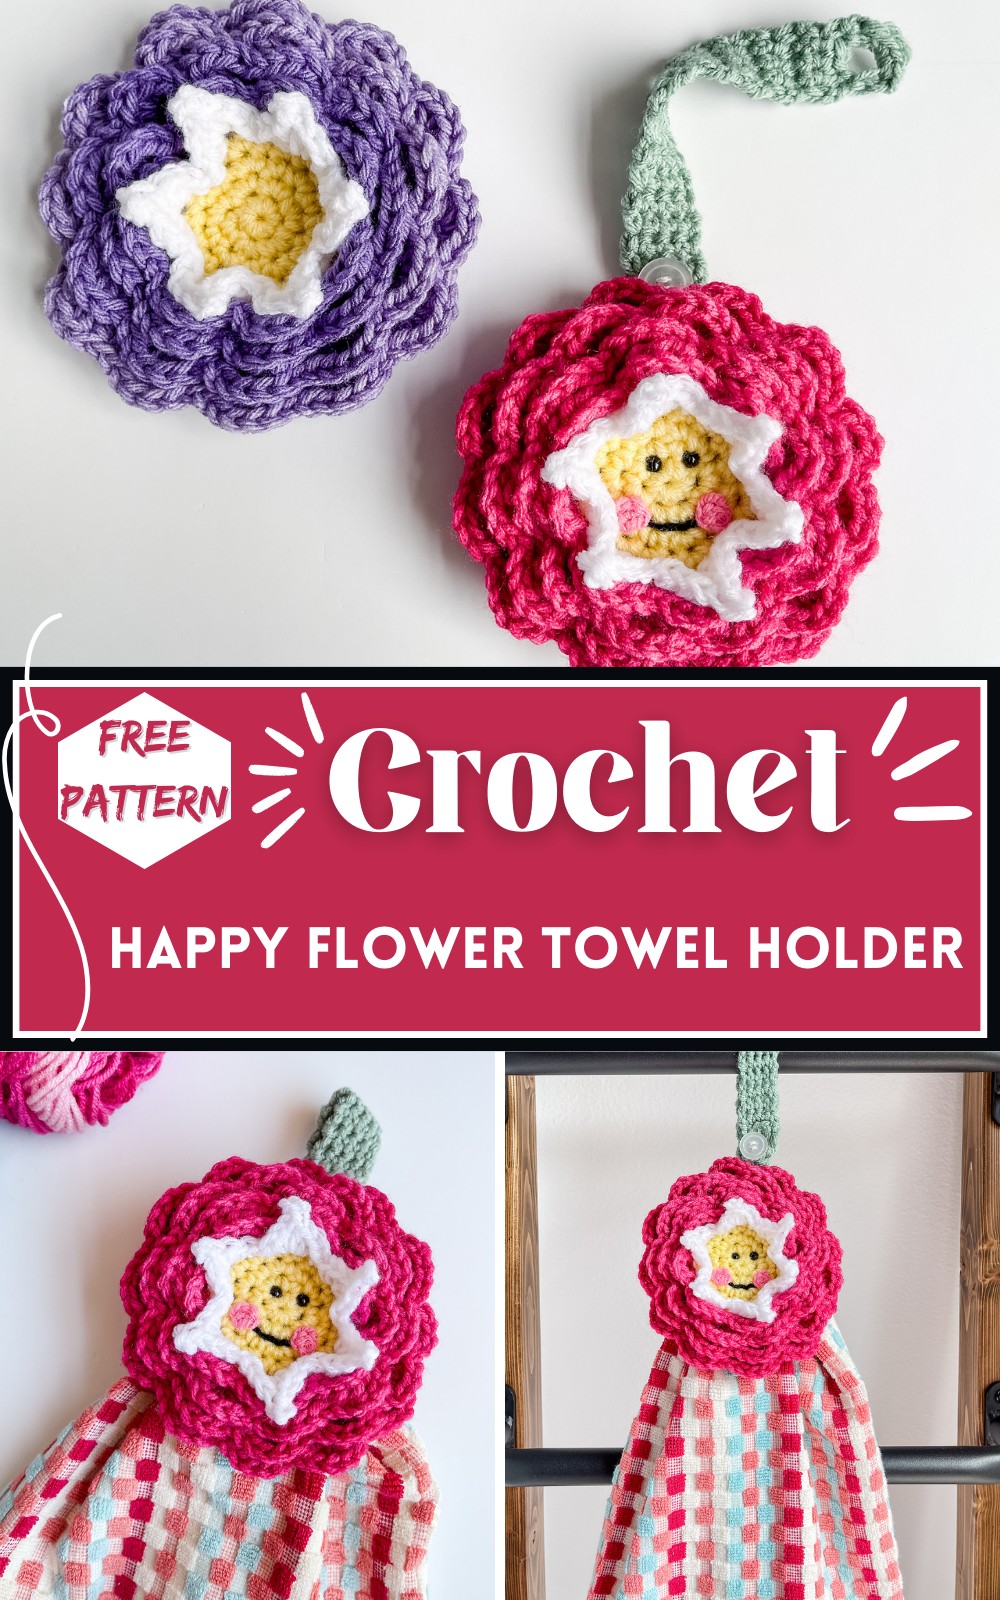 Happy Flower Towel Holder